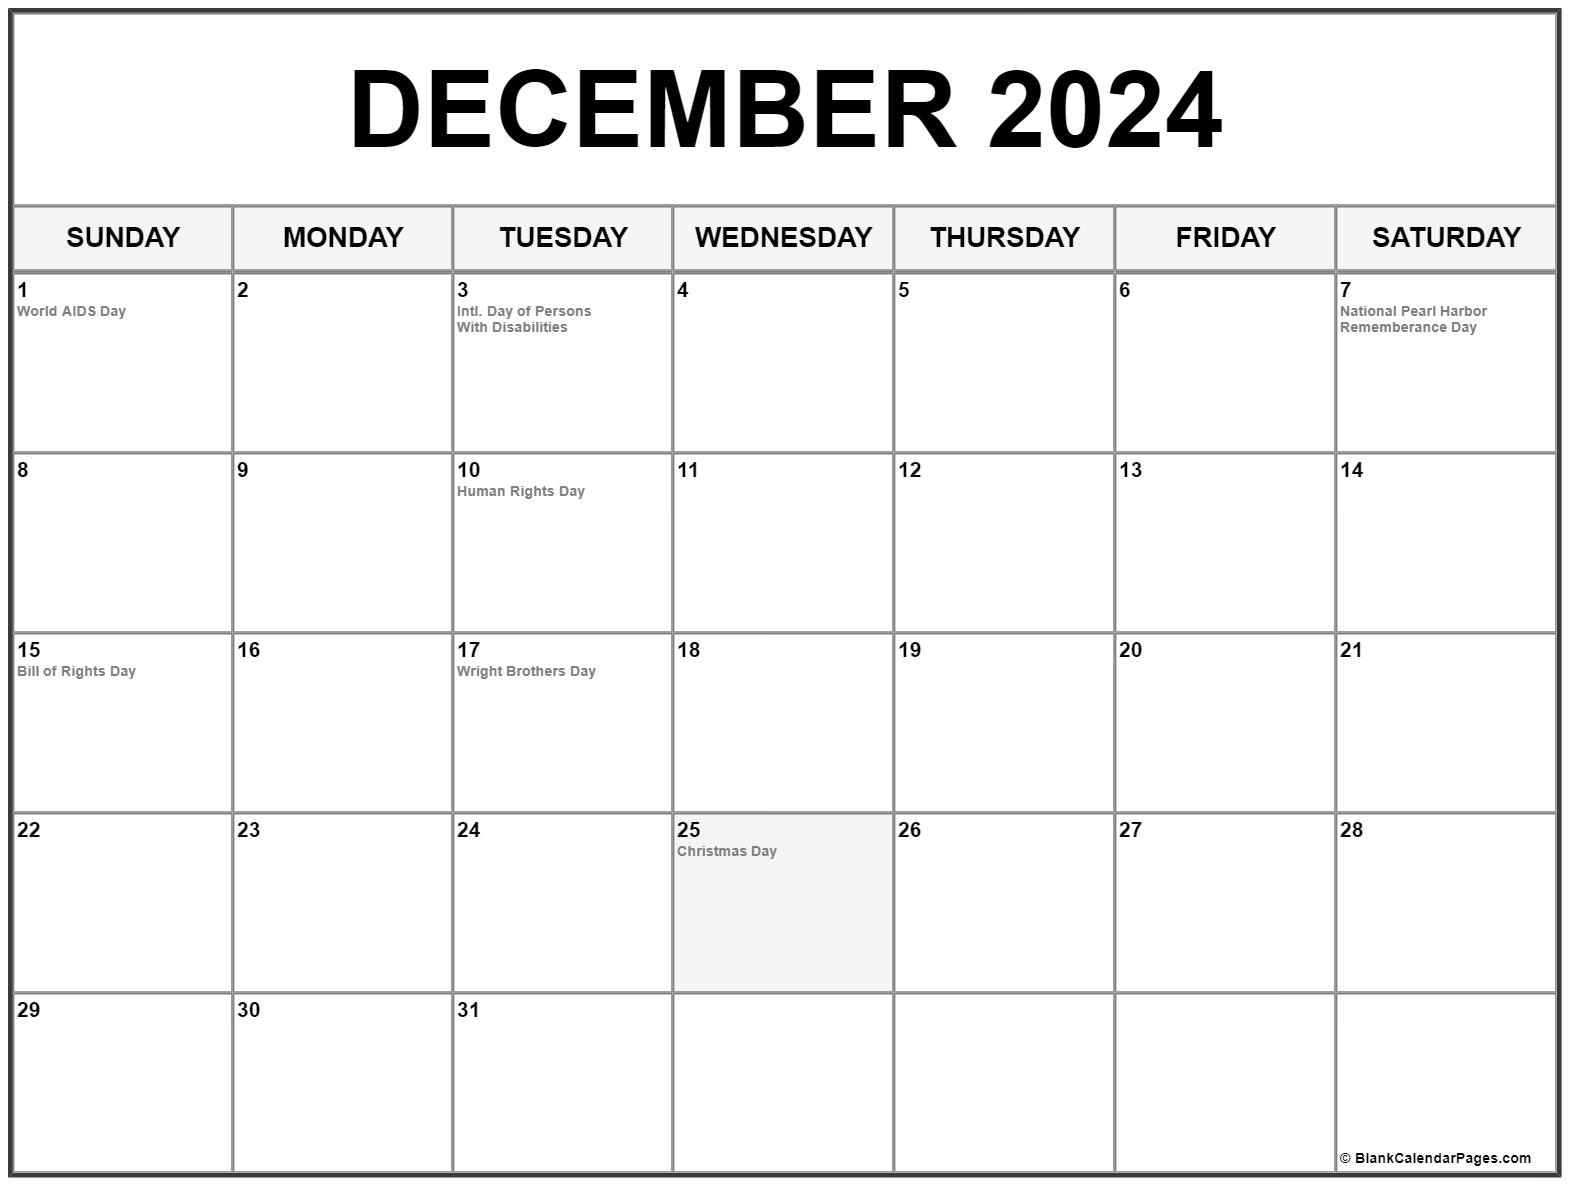 December 2024 Calendar With Holidays 2024 Summer Solstice - Free Printable 2024 December Calendar 8by10